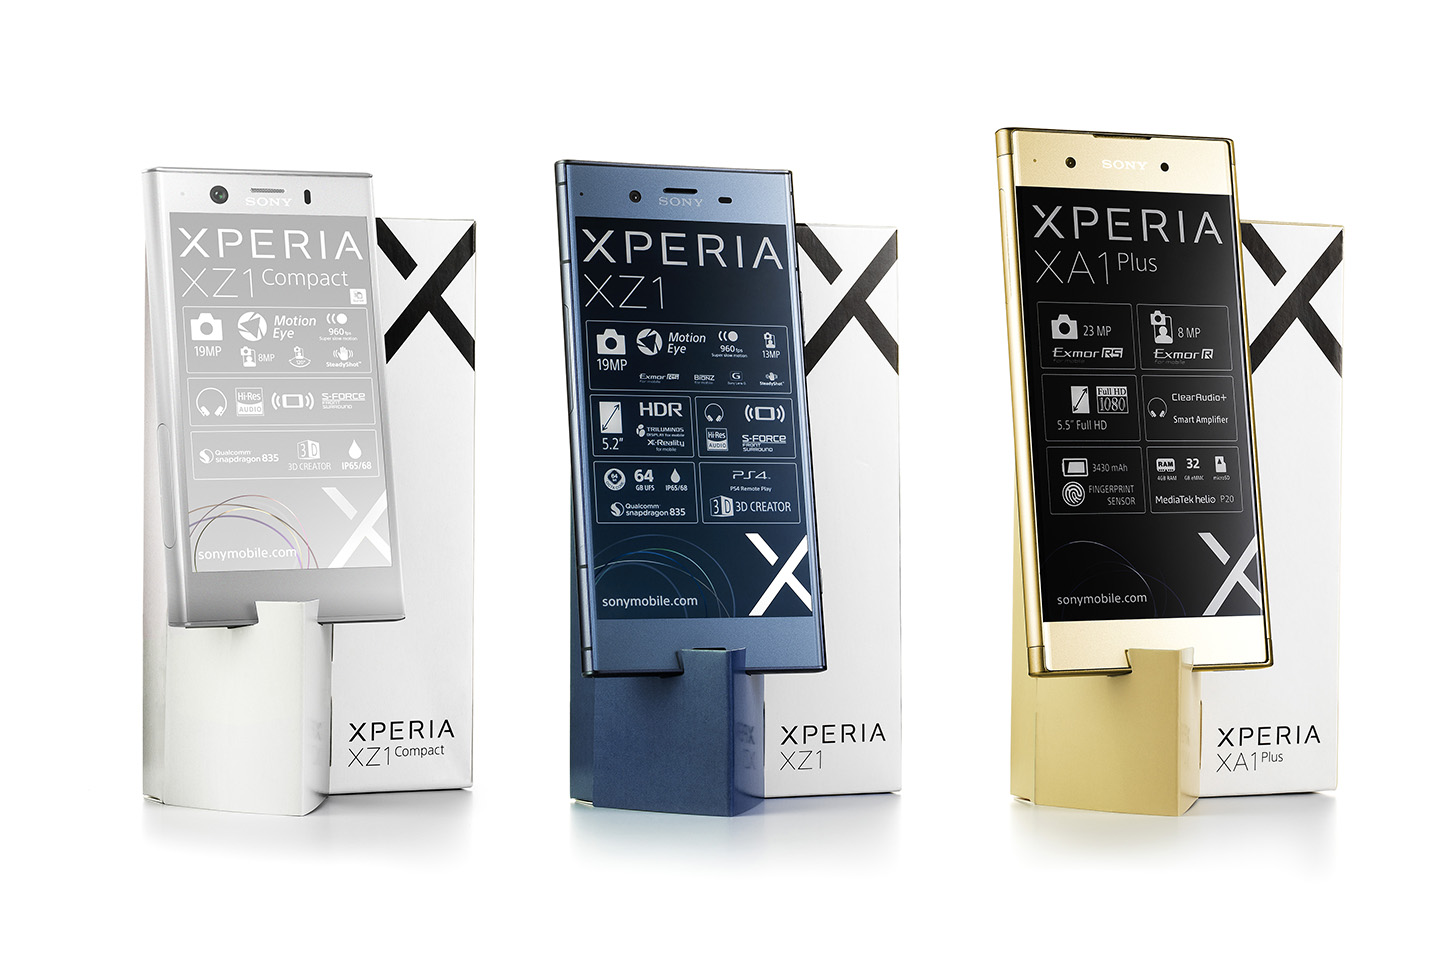 Sony Xperia XZ1 phone range with stand by adentity